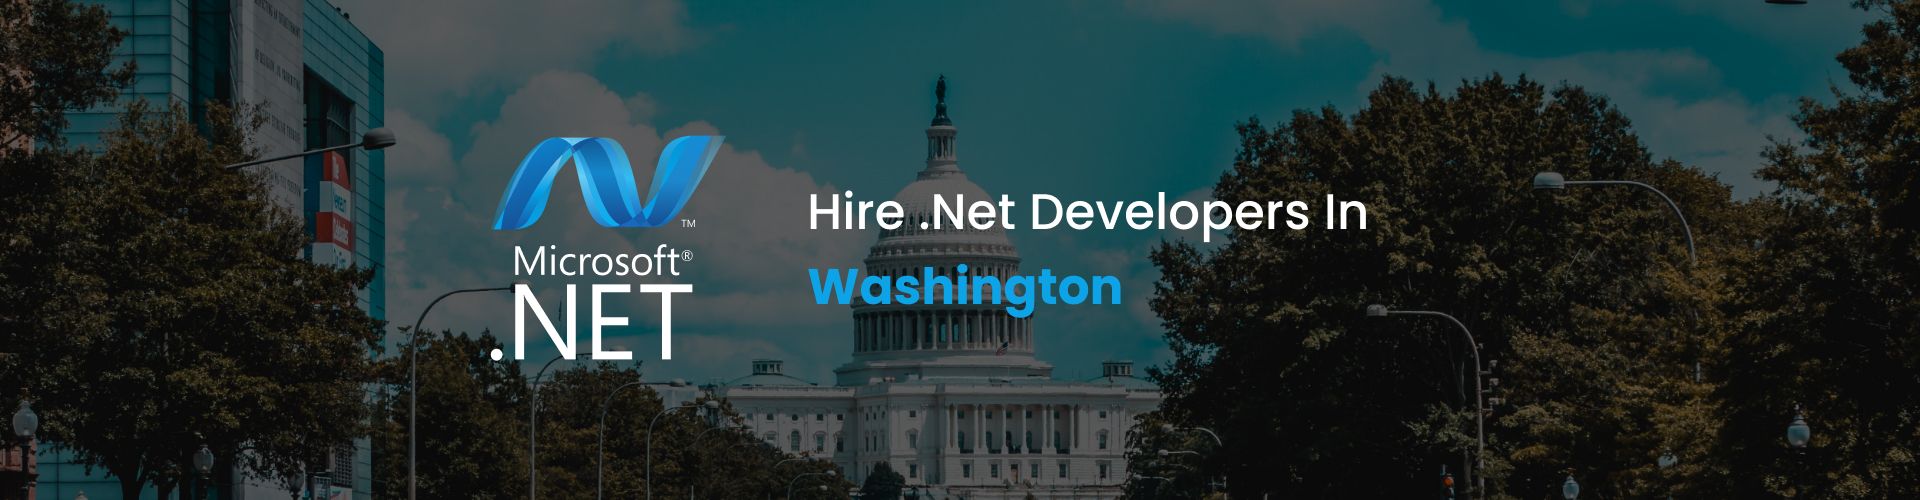 hire dot net developers in washington